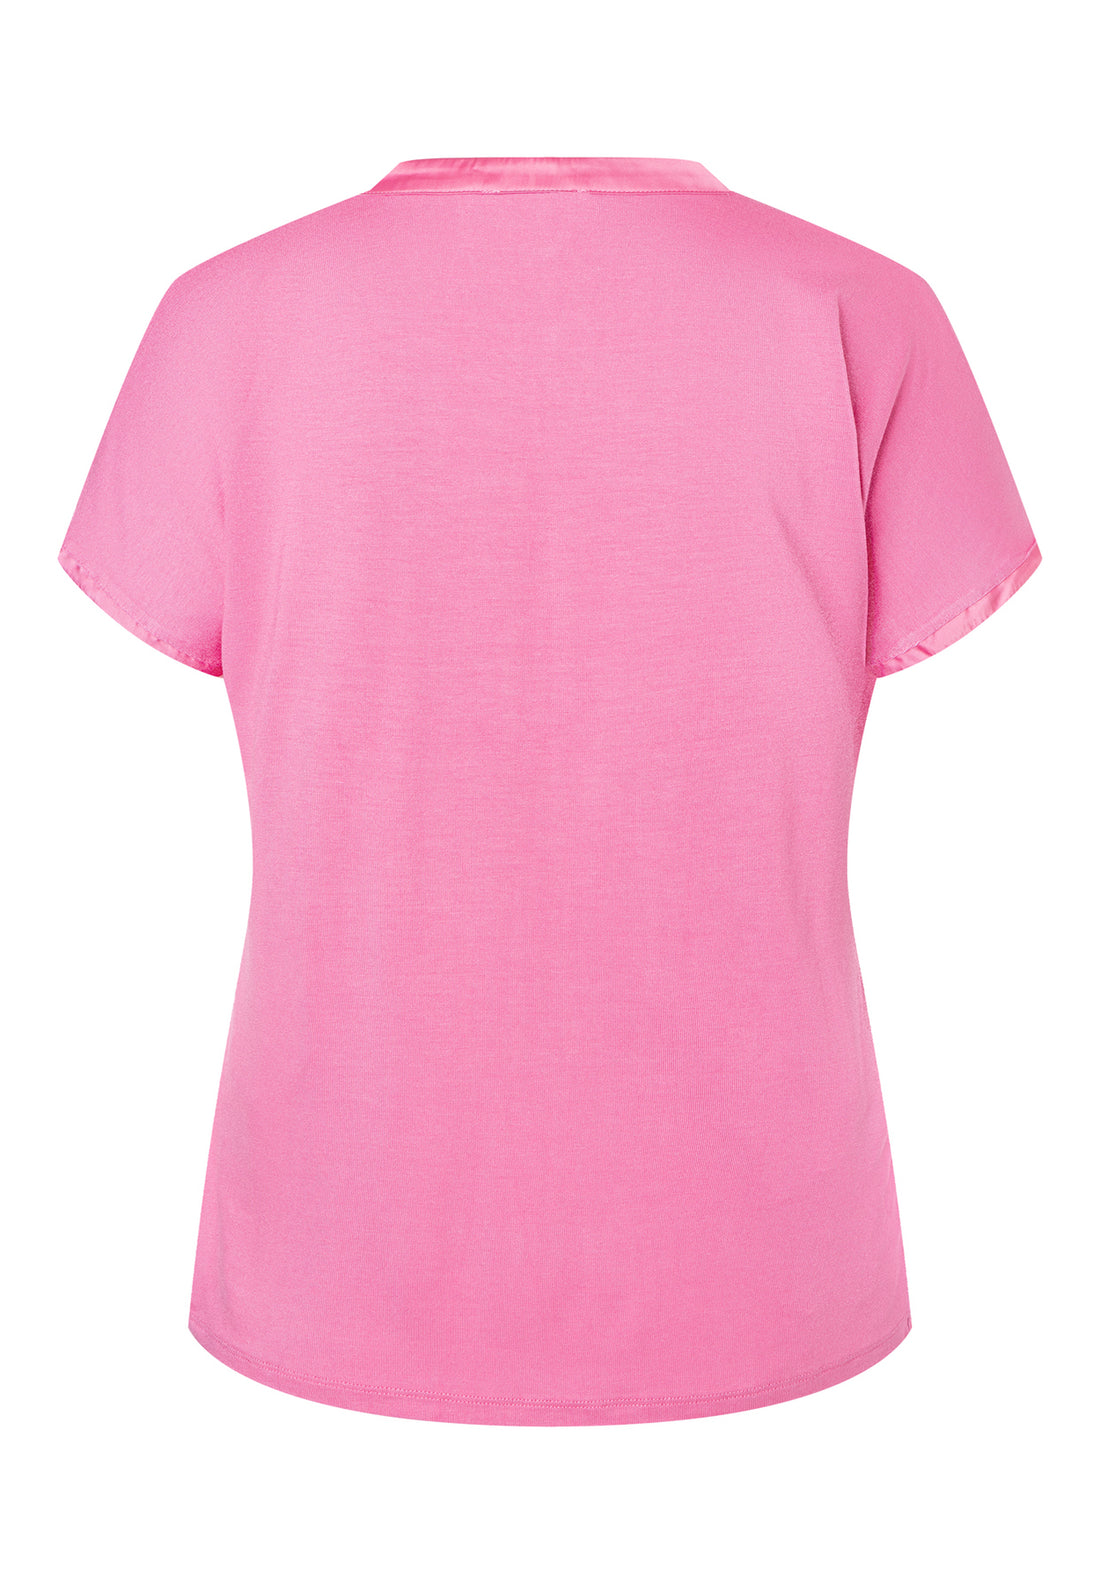 Blouse Shirt, Pink - 02